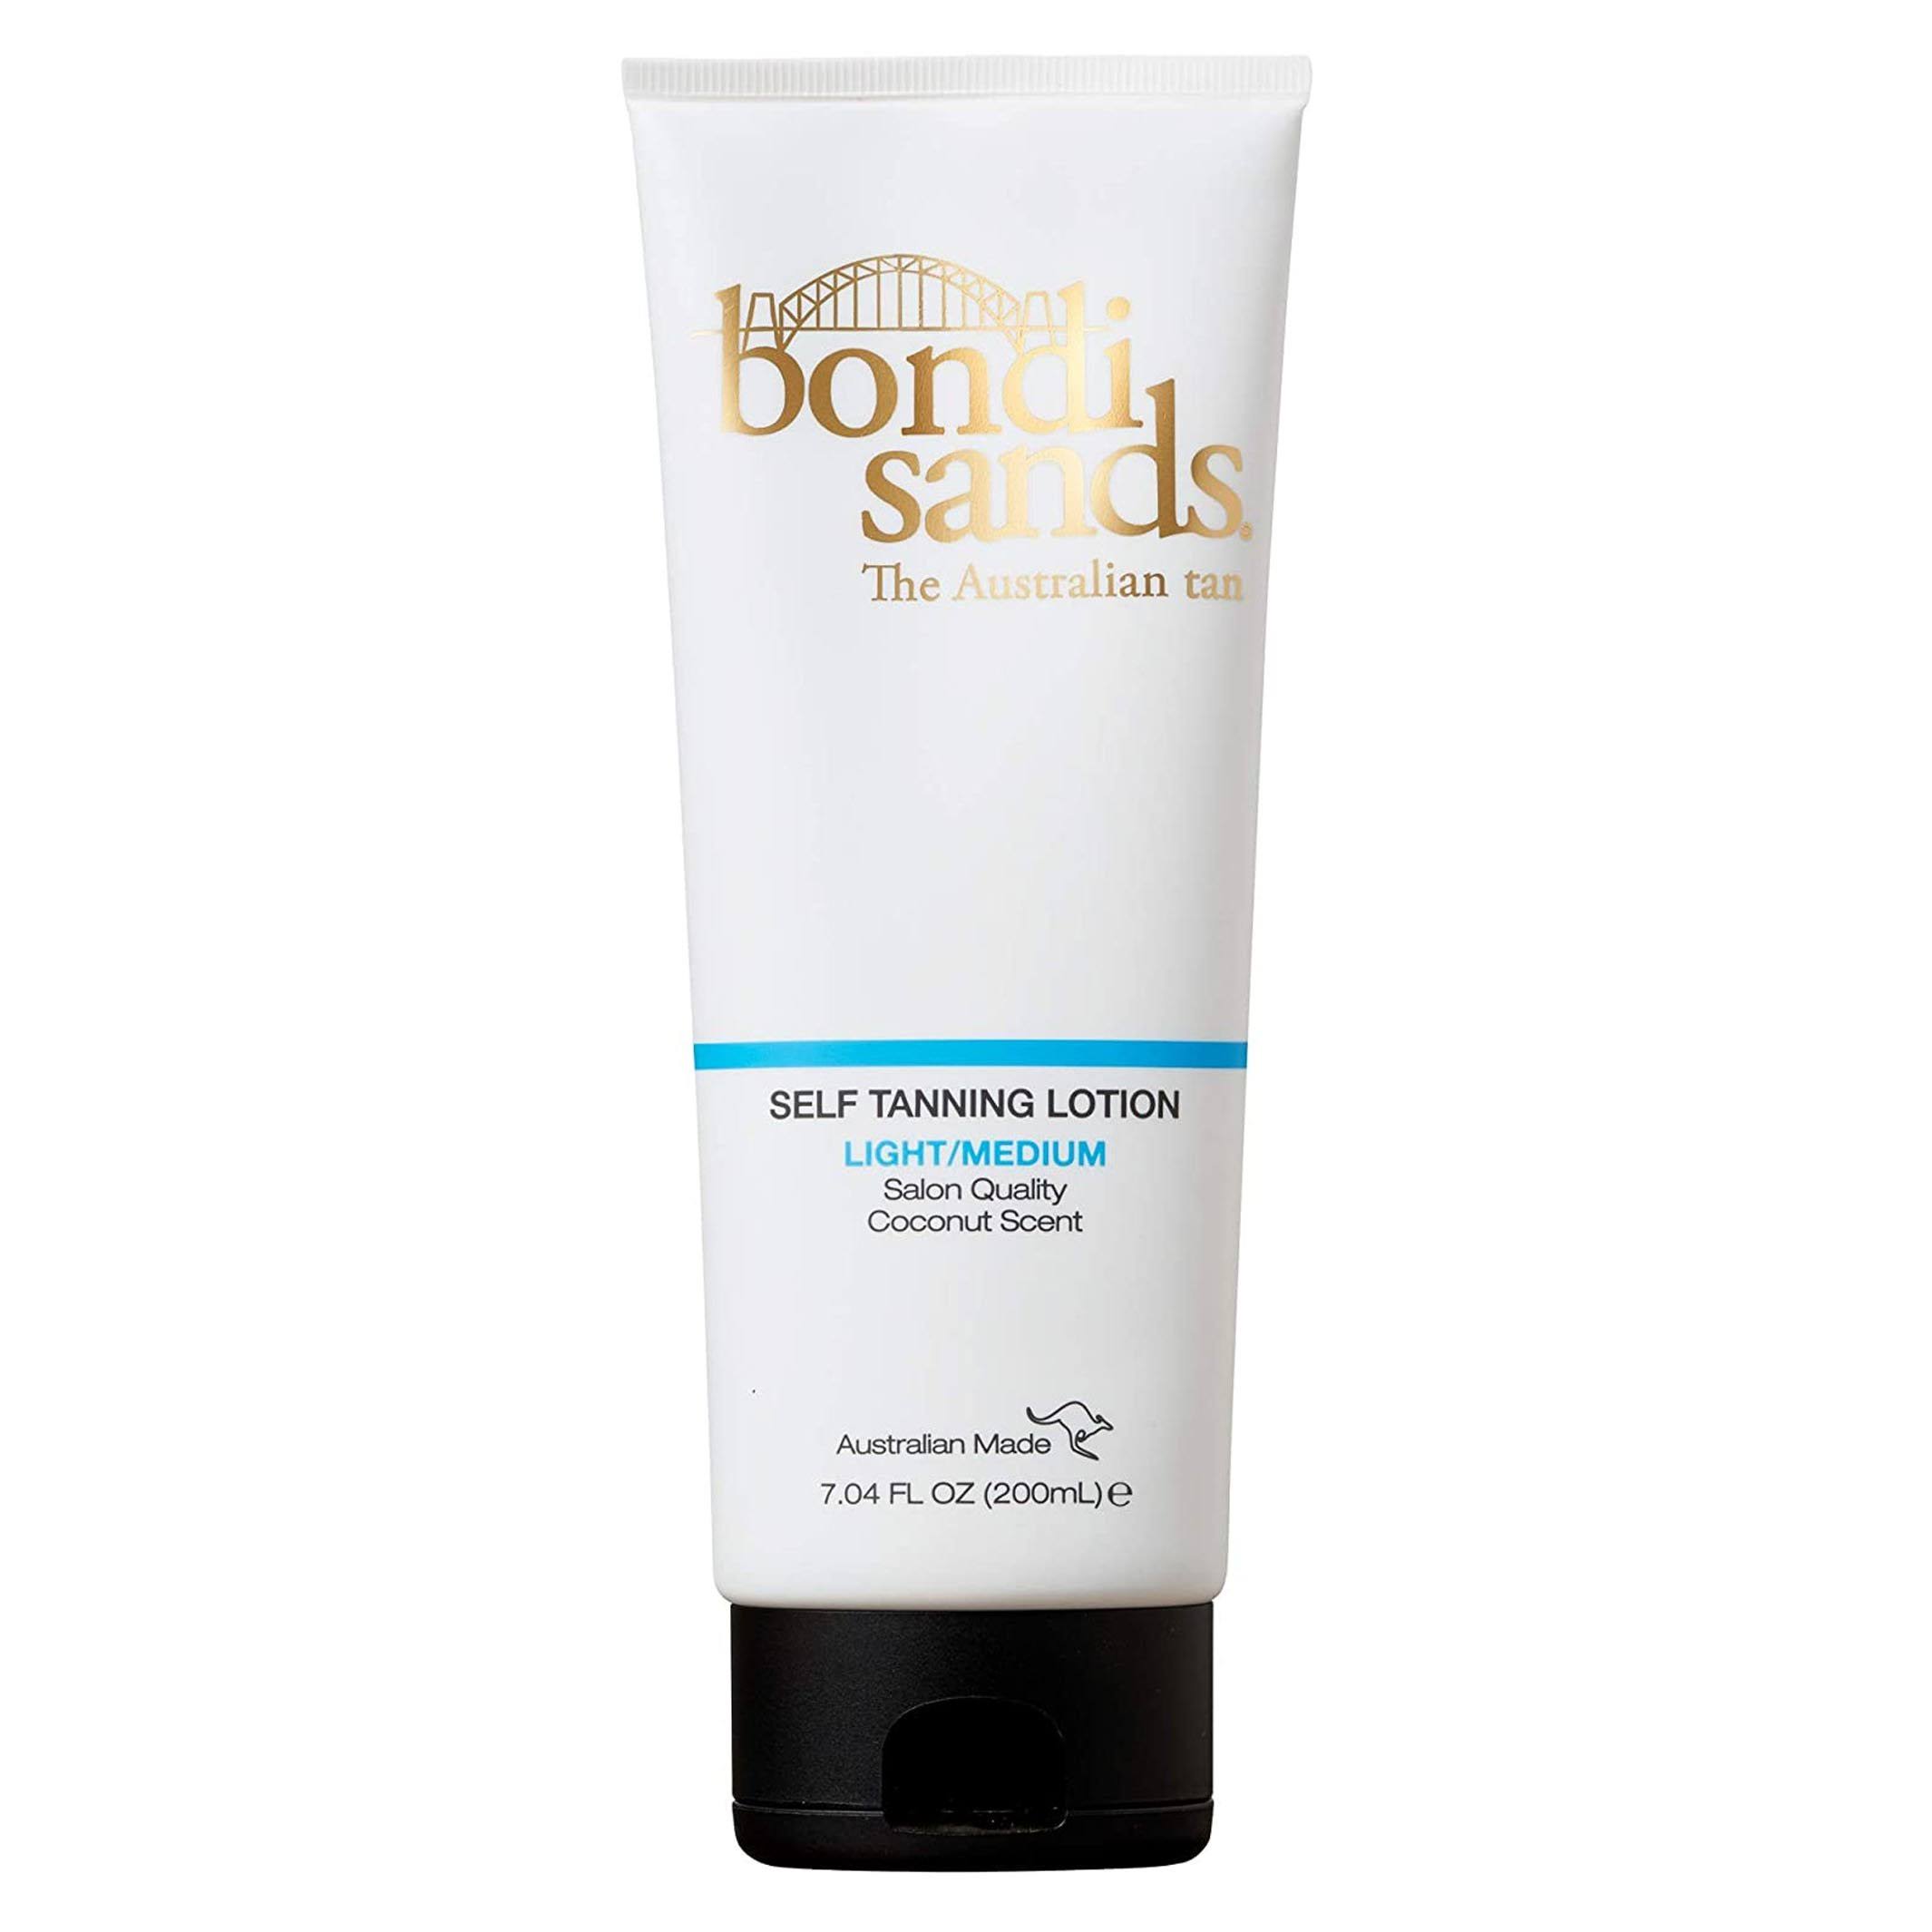 Bondi Sands Self Tanning Lotion - Light and Medium, 200ml